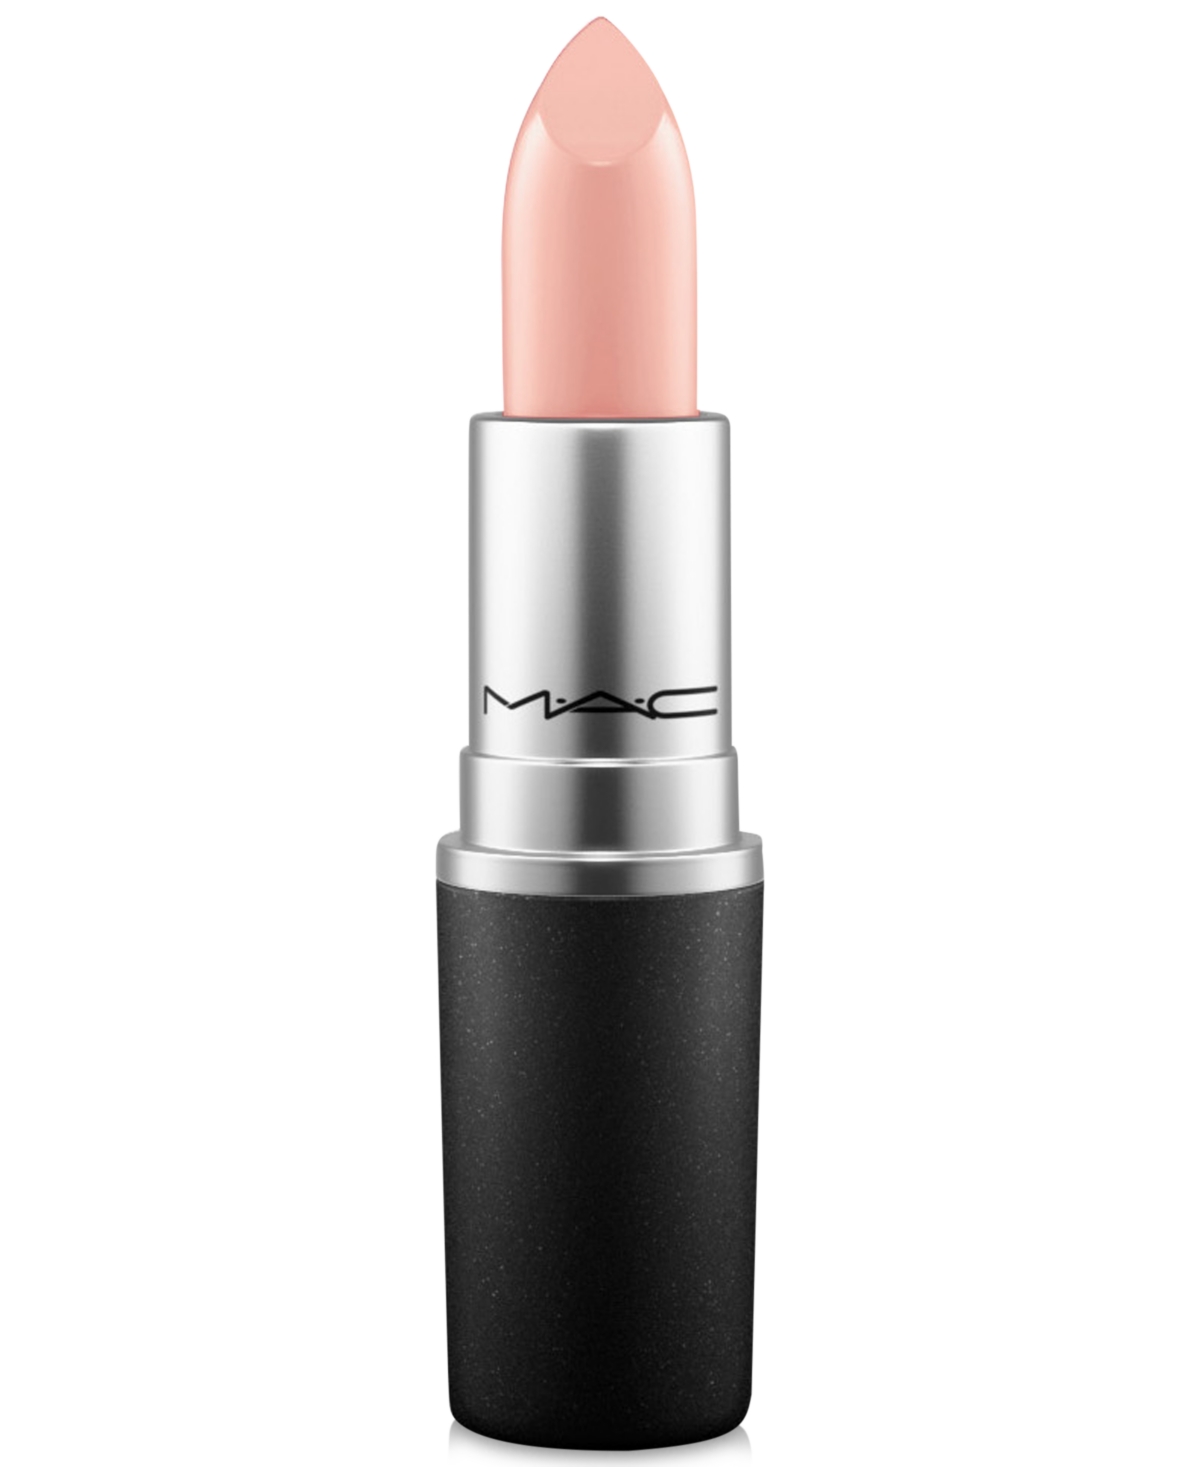 Mac Cremesheen Lipstick In Crã¨me D'nude